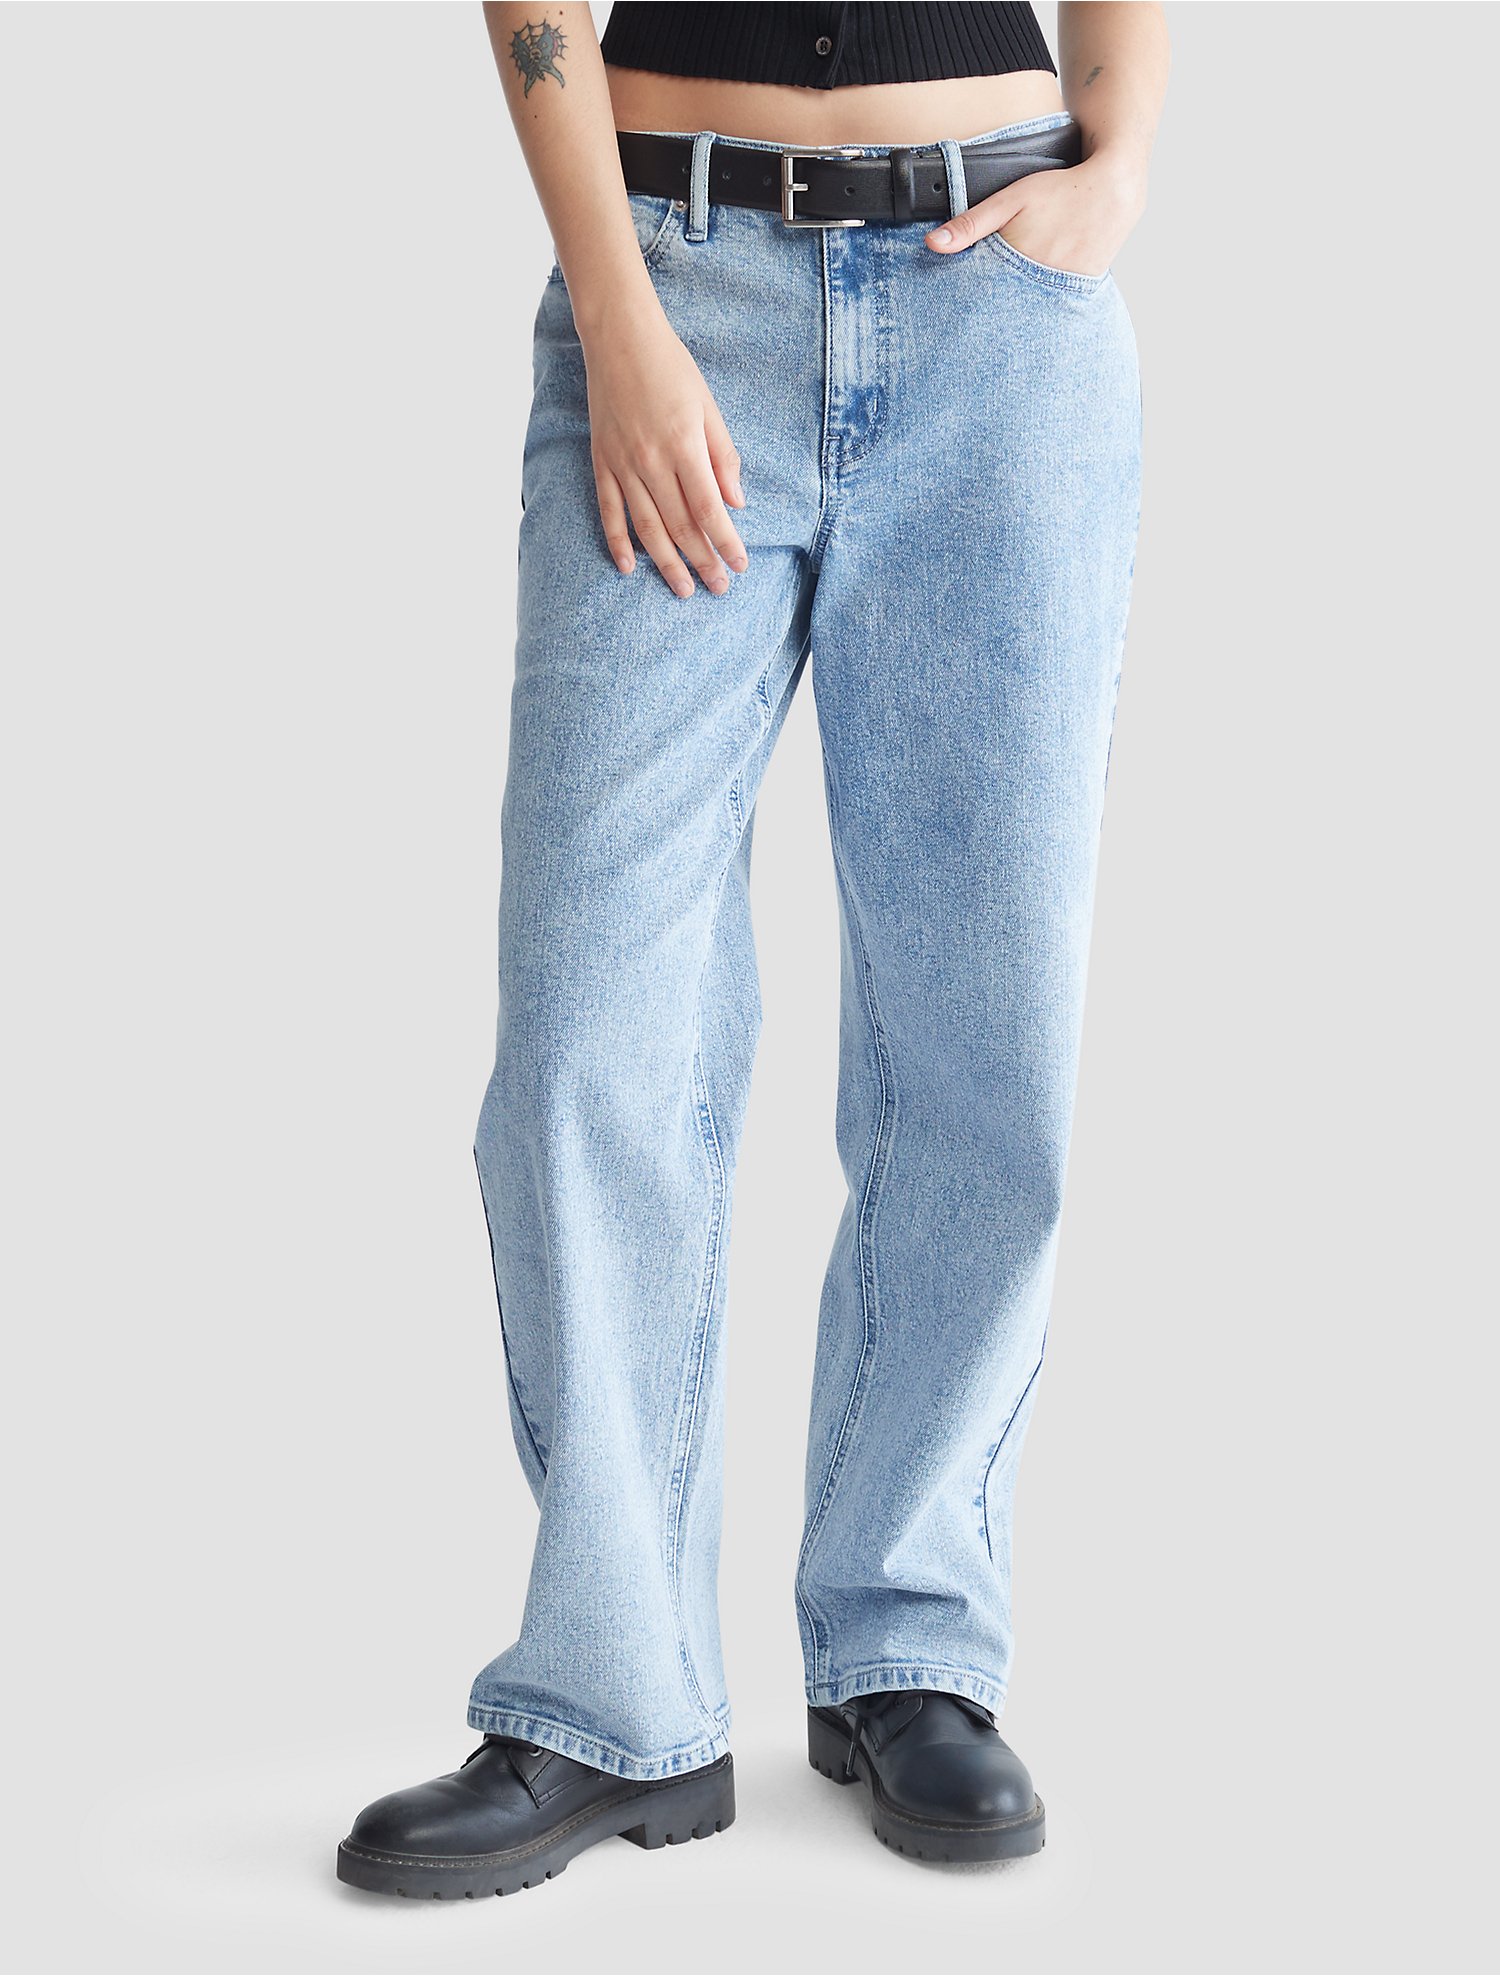 Calvin Klein Jeans Jackets - Buy Calvin Klein Jeans Jackets online in India